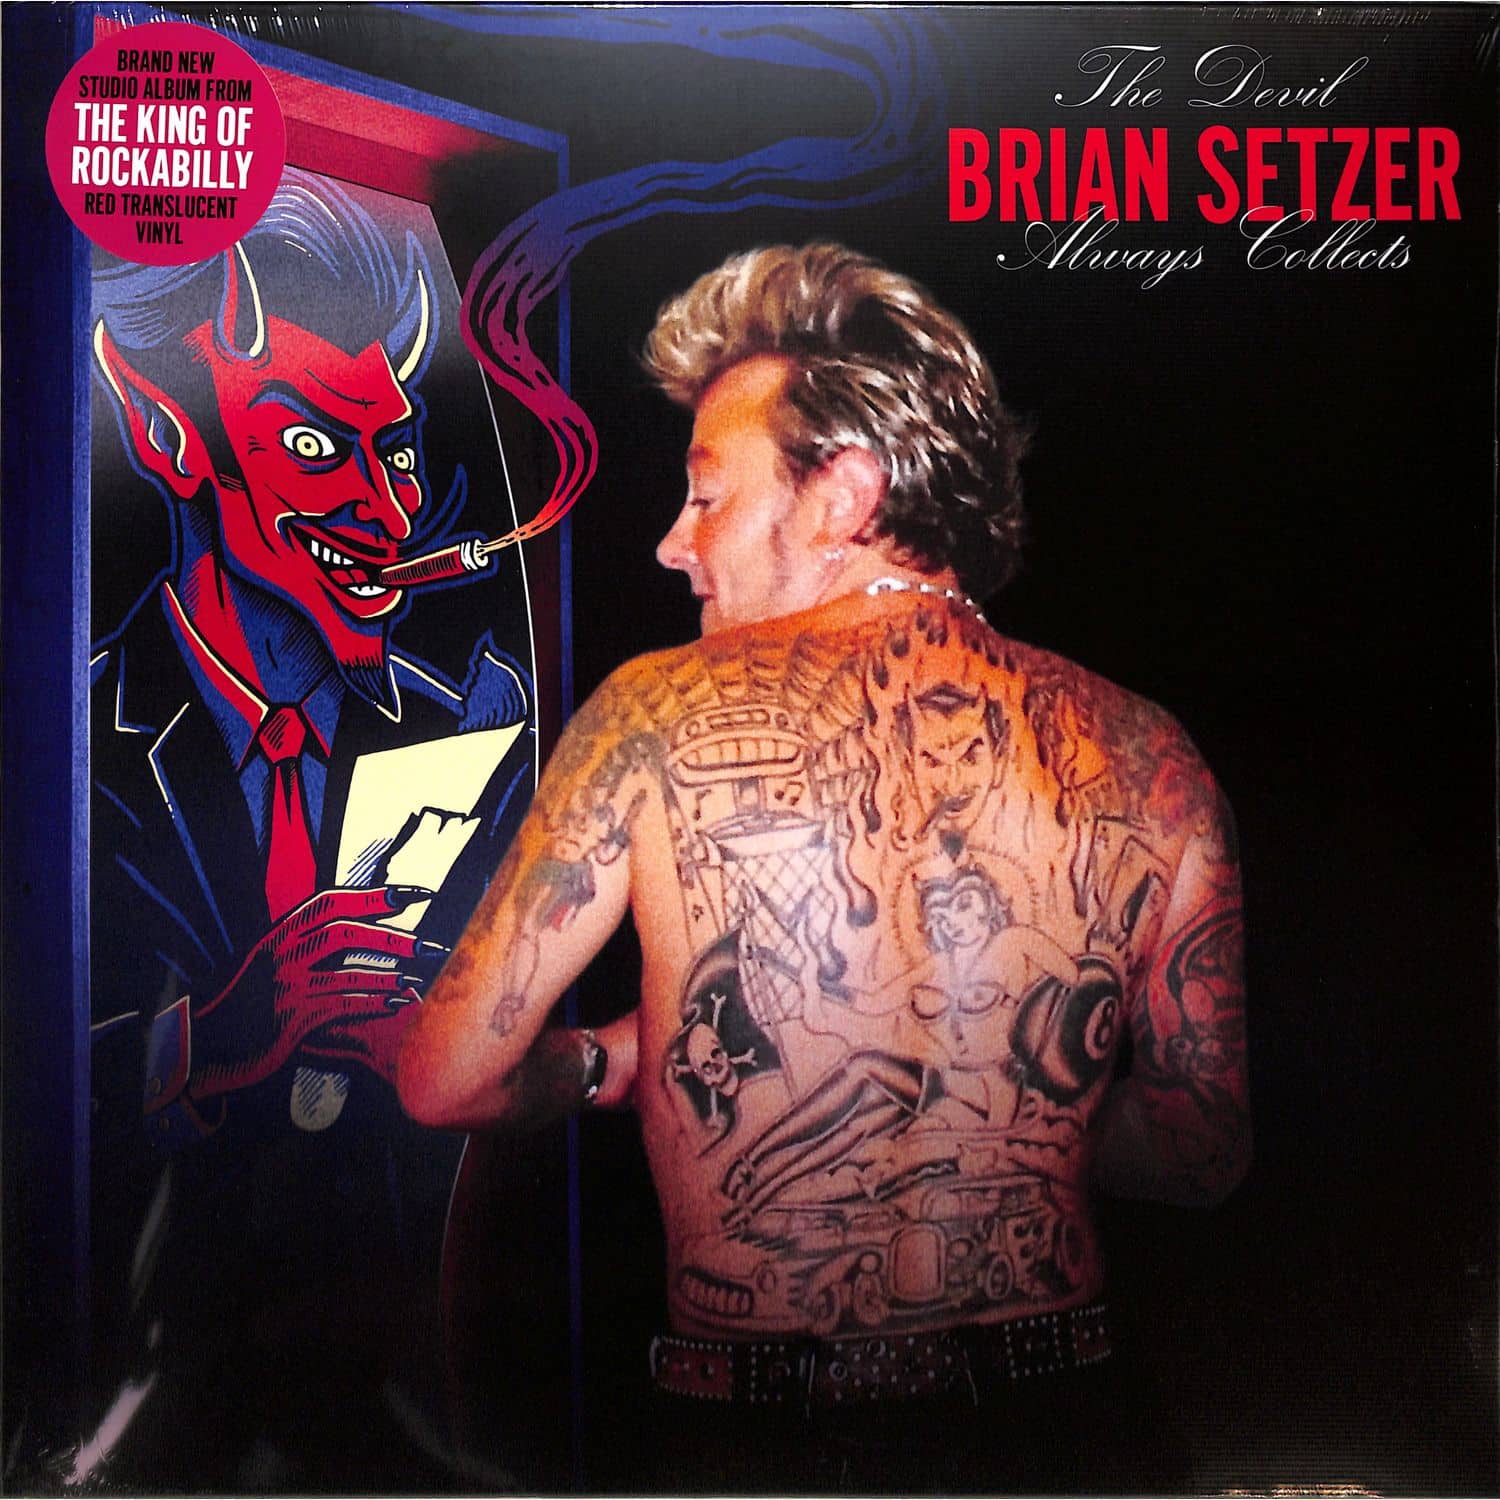 Brian Setzer - THE DEVIL ALWAYS COLLECTS 